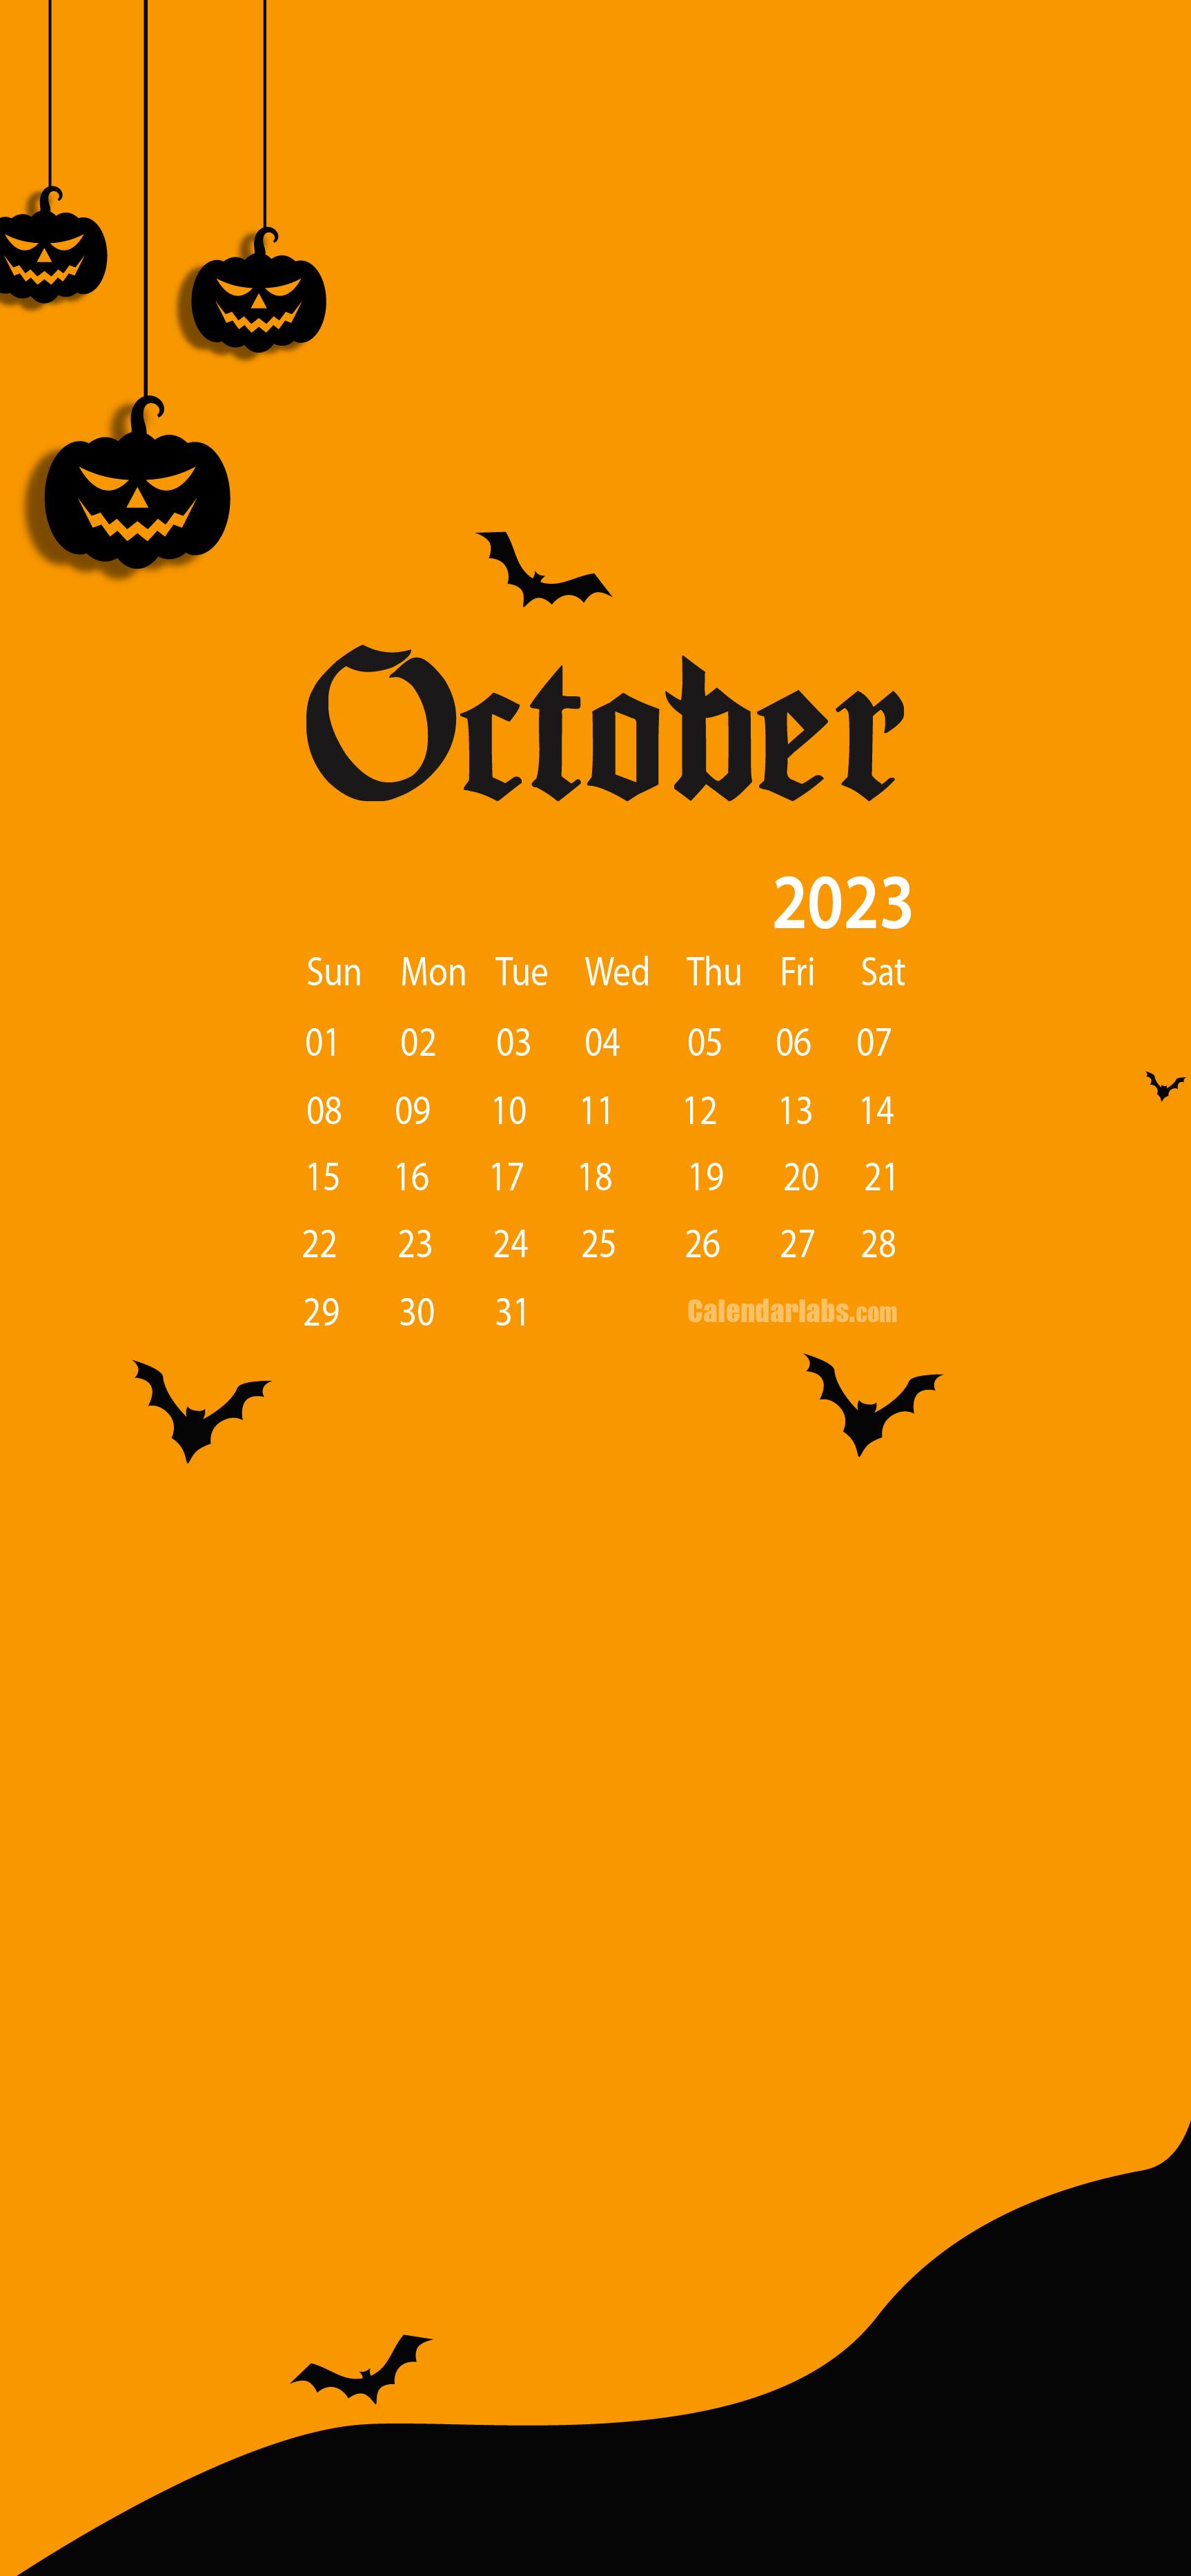 October Desktop Wallpaper Calendar Calendarlabs